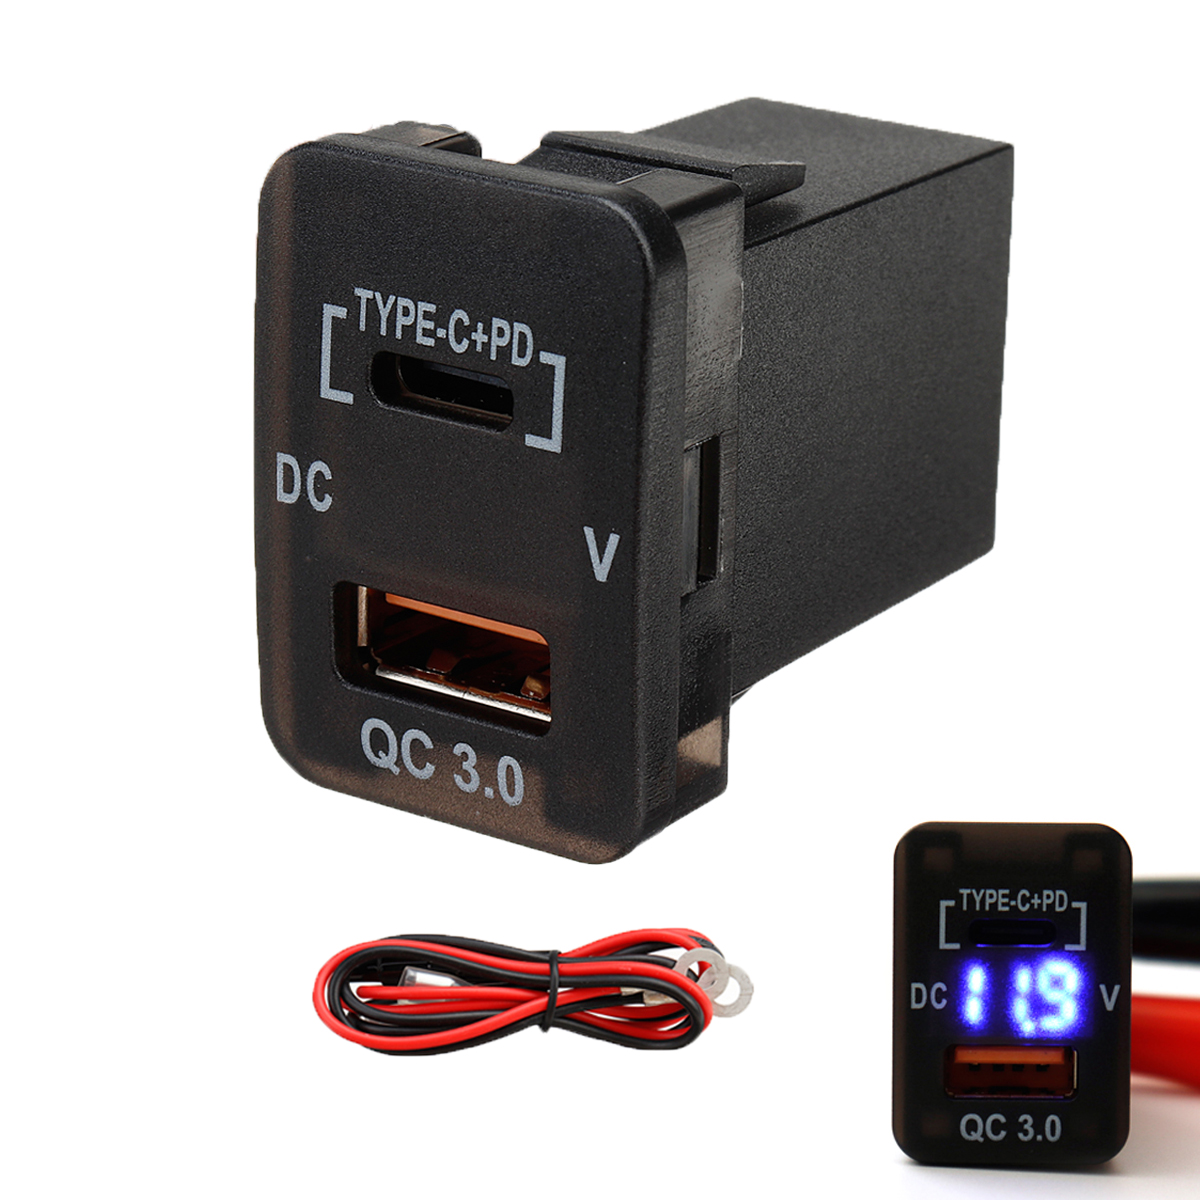 TYPE C+PD & QC3.0 Port Dual Battery Volt Meter for Toyota Prado 150 Landcruiser